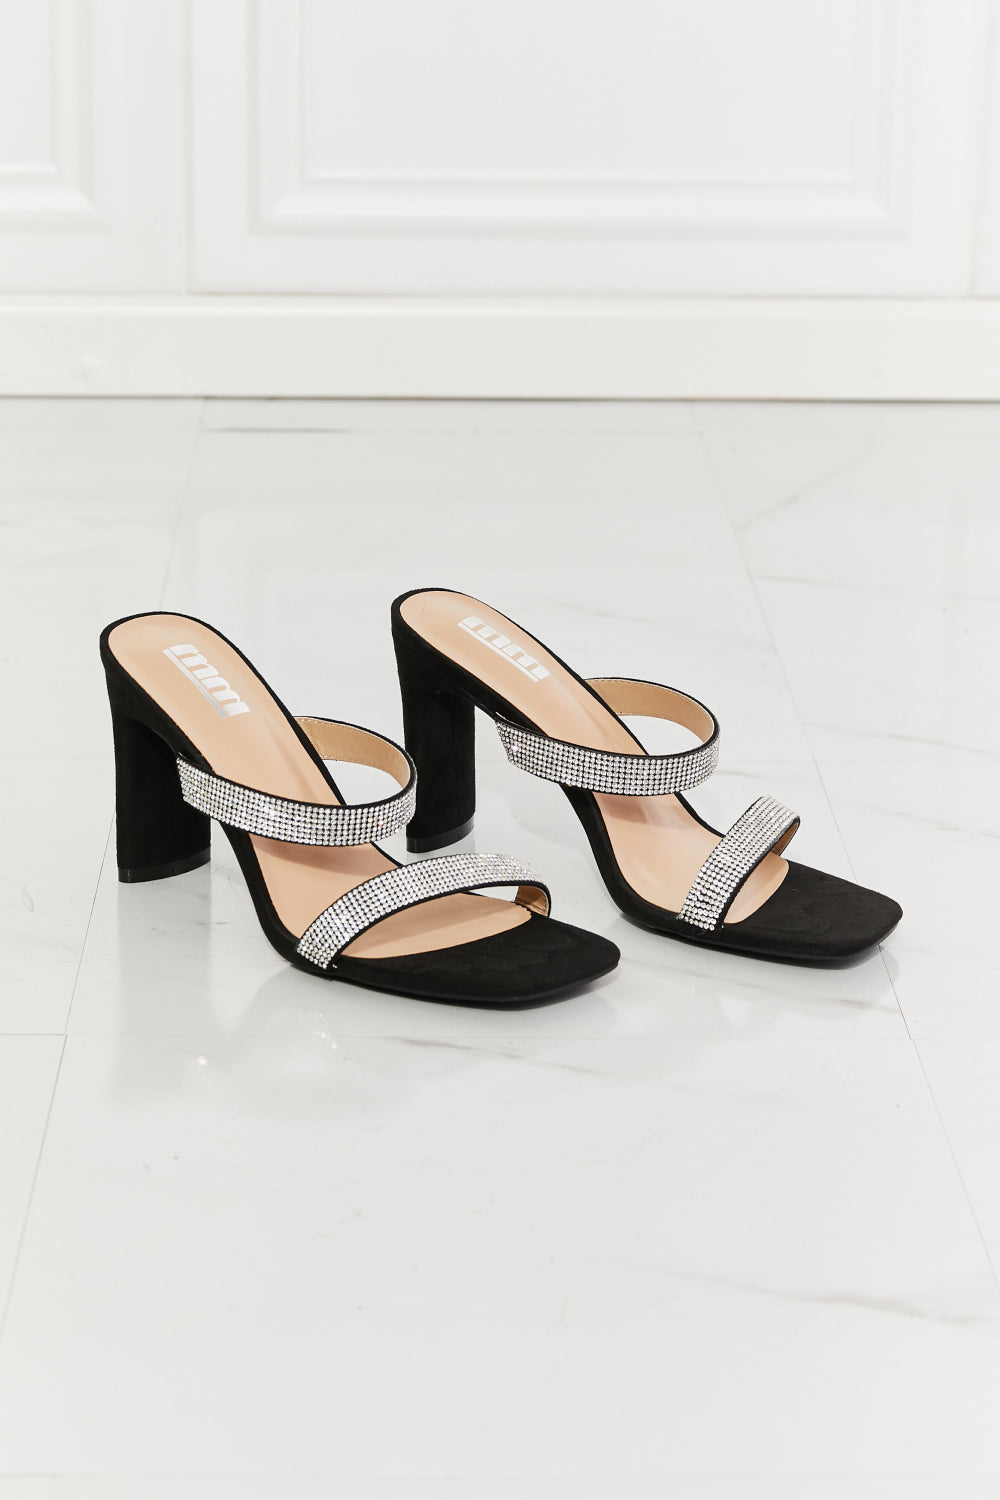 MMShoes Leave A Little Sparkle Rhinestone Block Heel Sandal in Black - The Fashion Unicorn